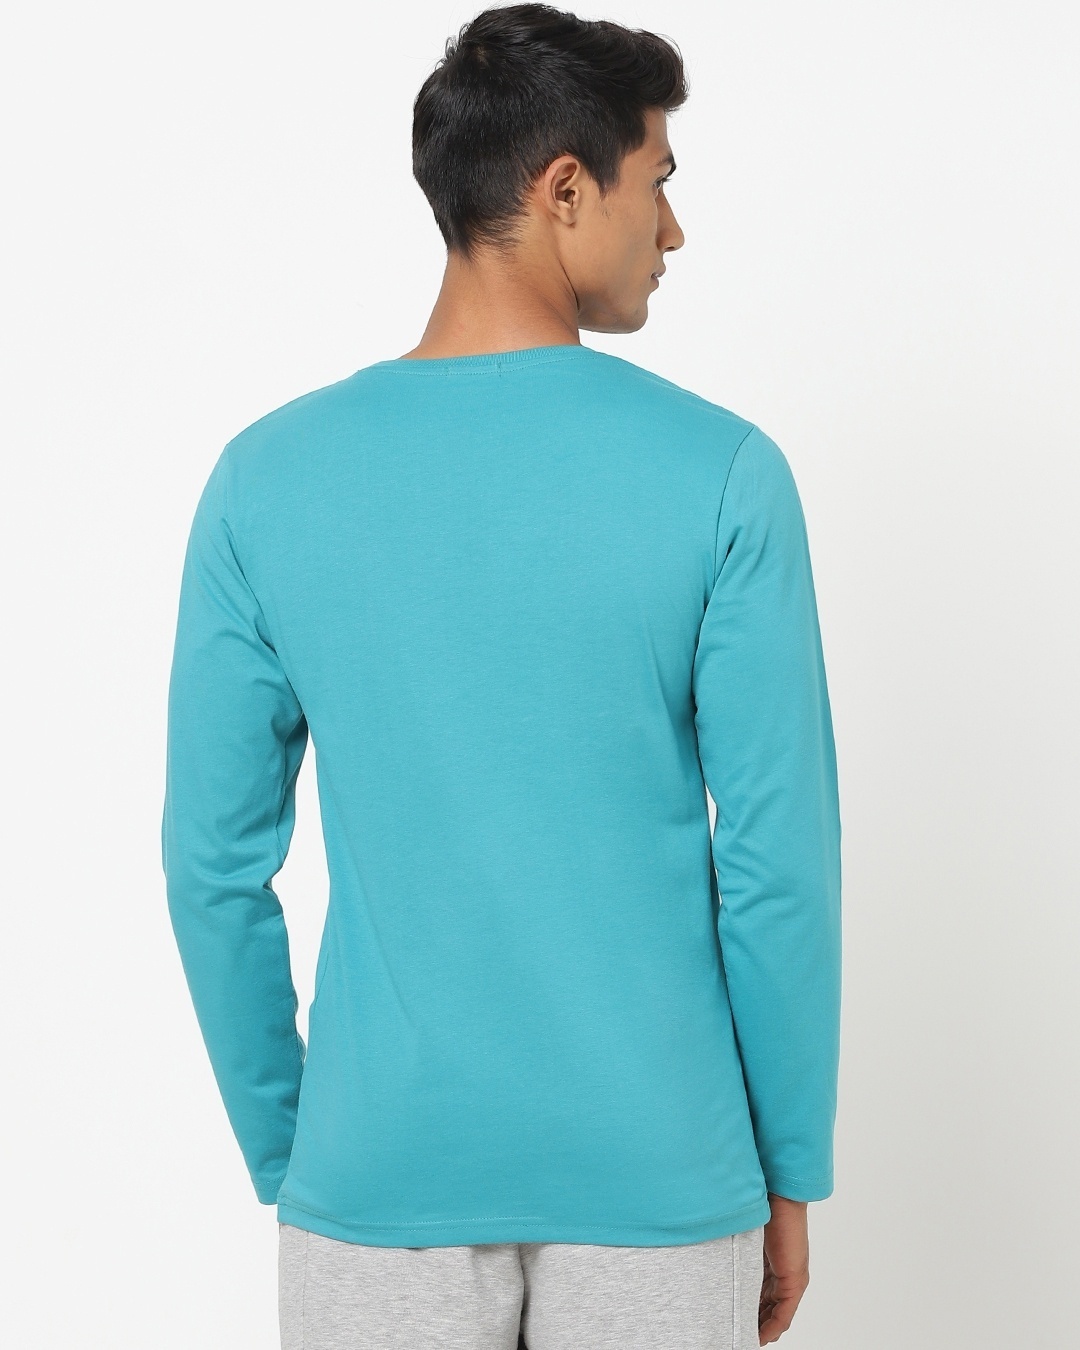 Shop Tropical Blue Full Sleeve T-Shirt-Design